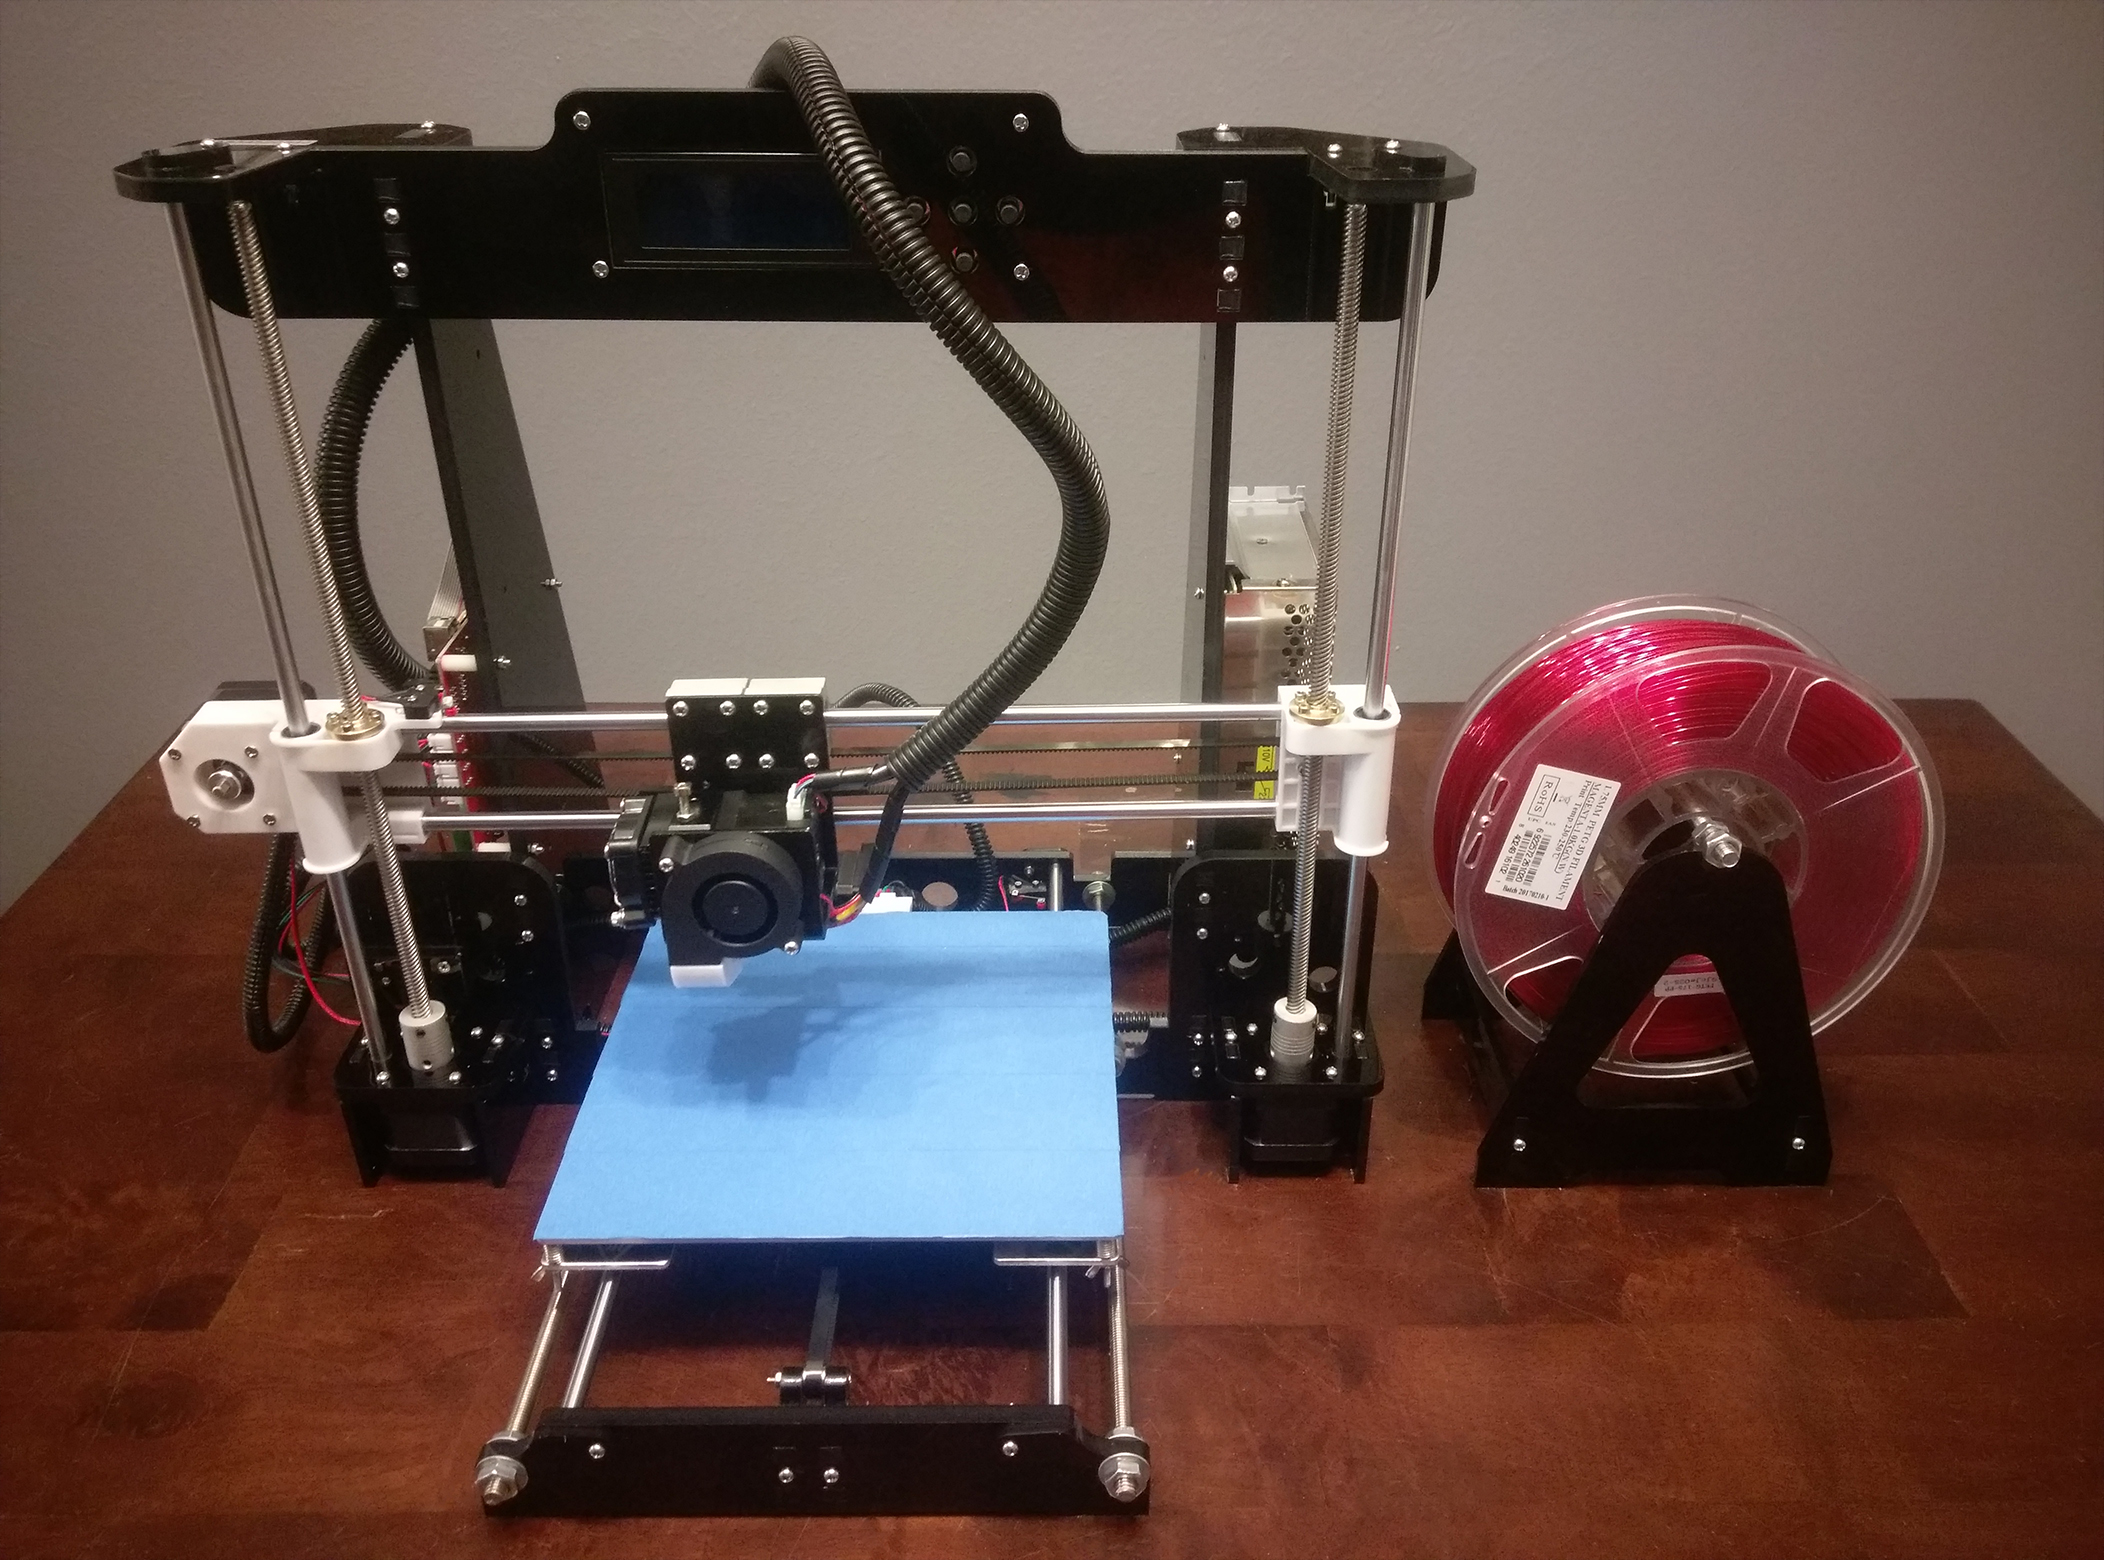 Review: The Anet A8 3D Printer - Anet A8 3D Printer